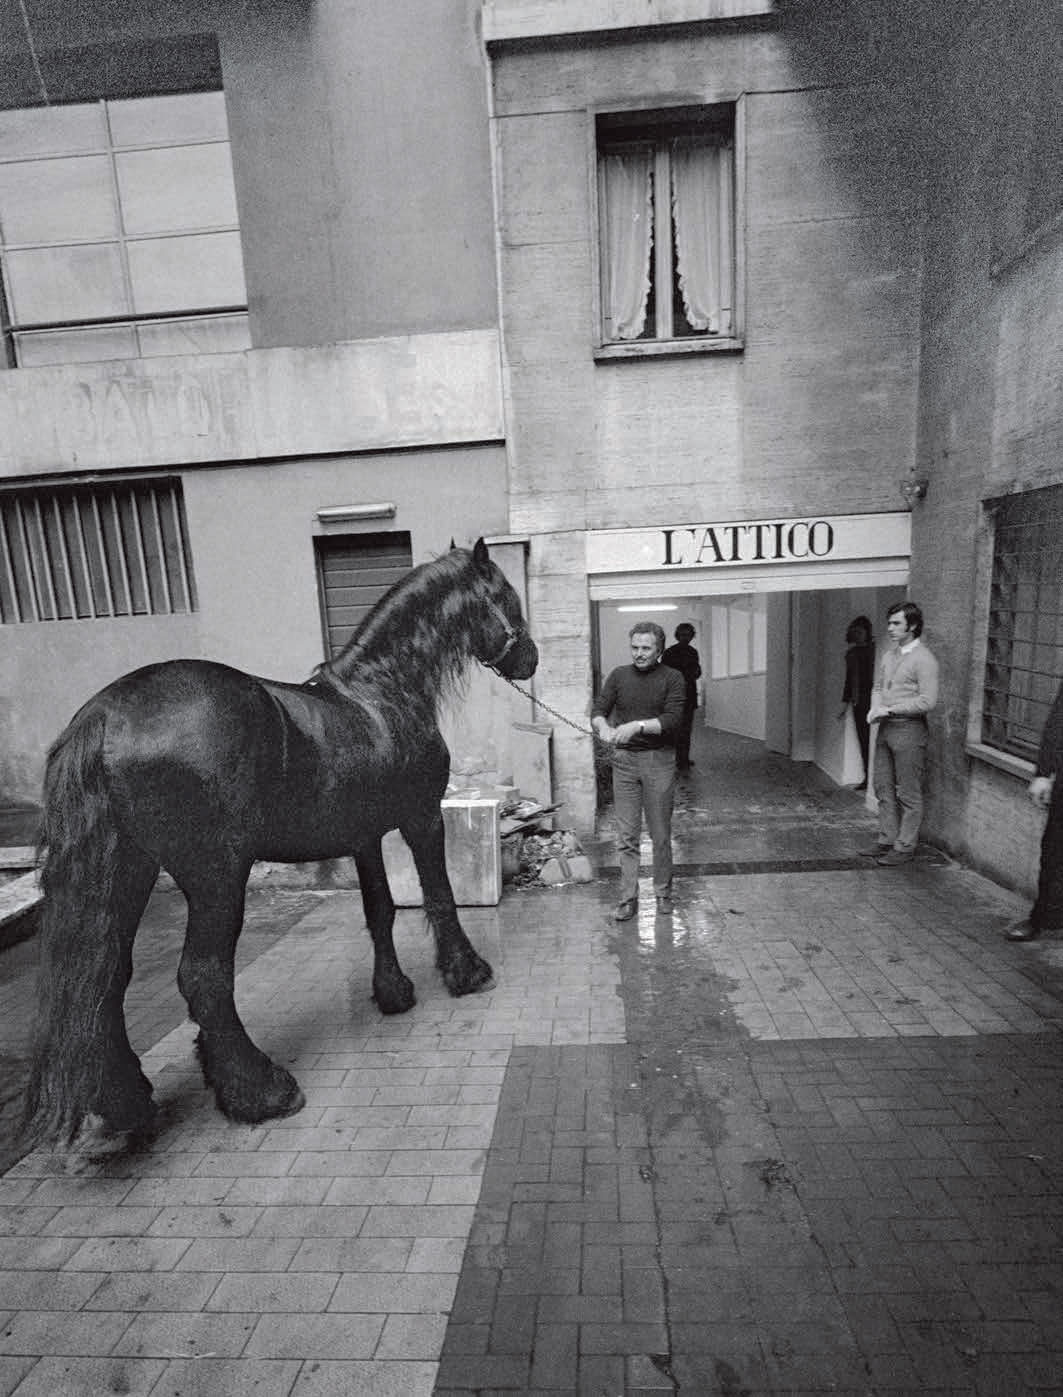 Gallery assistants at work on Untitled (Cavalli), Galleria L’Attico, Roma, 1969